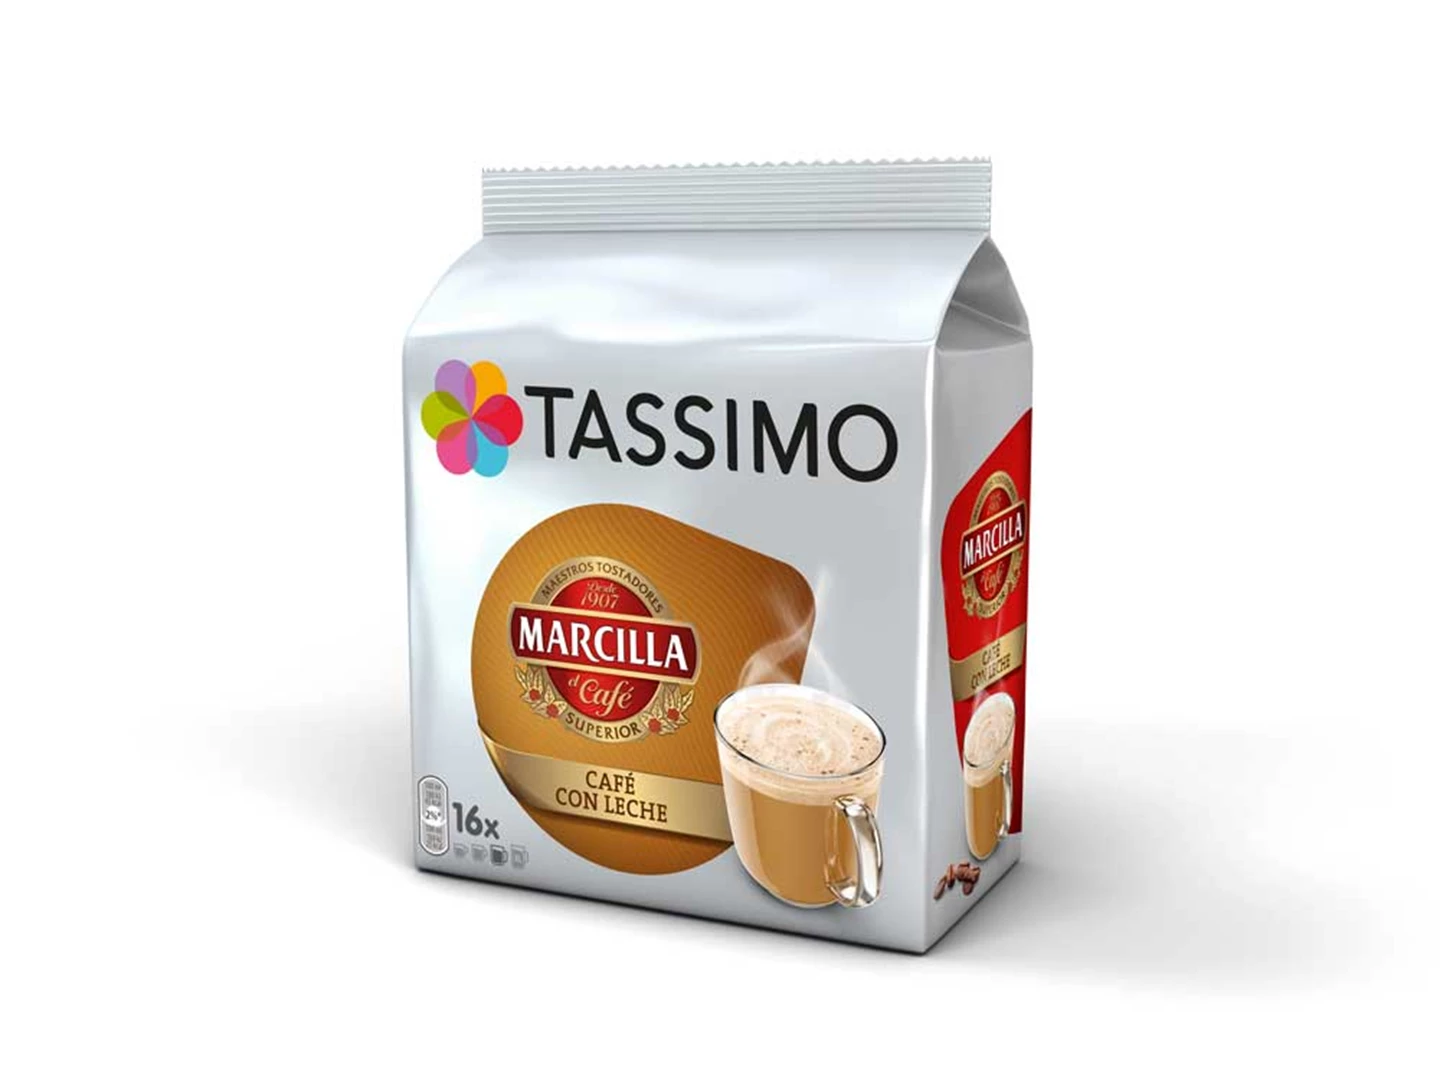 Qué Cápsulas de Café TASSIMO Comprar en 2022?